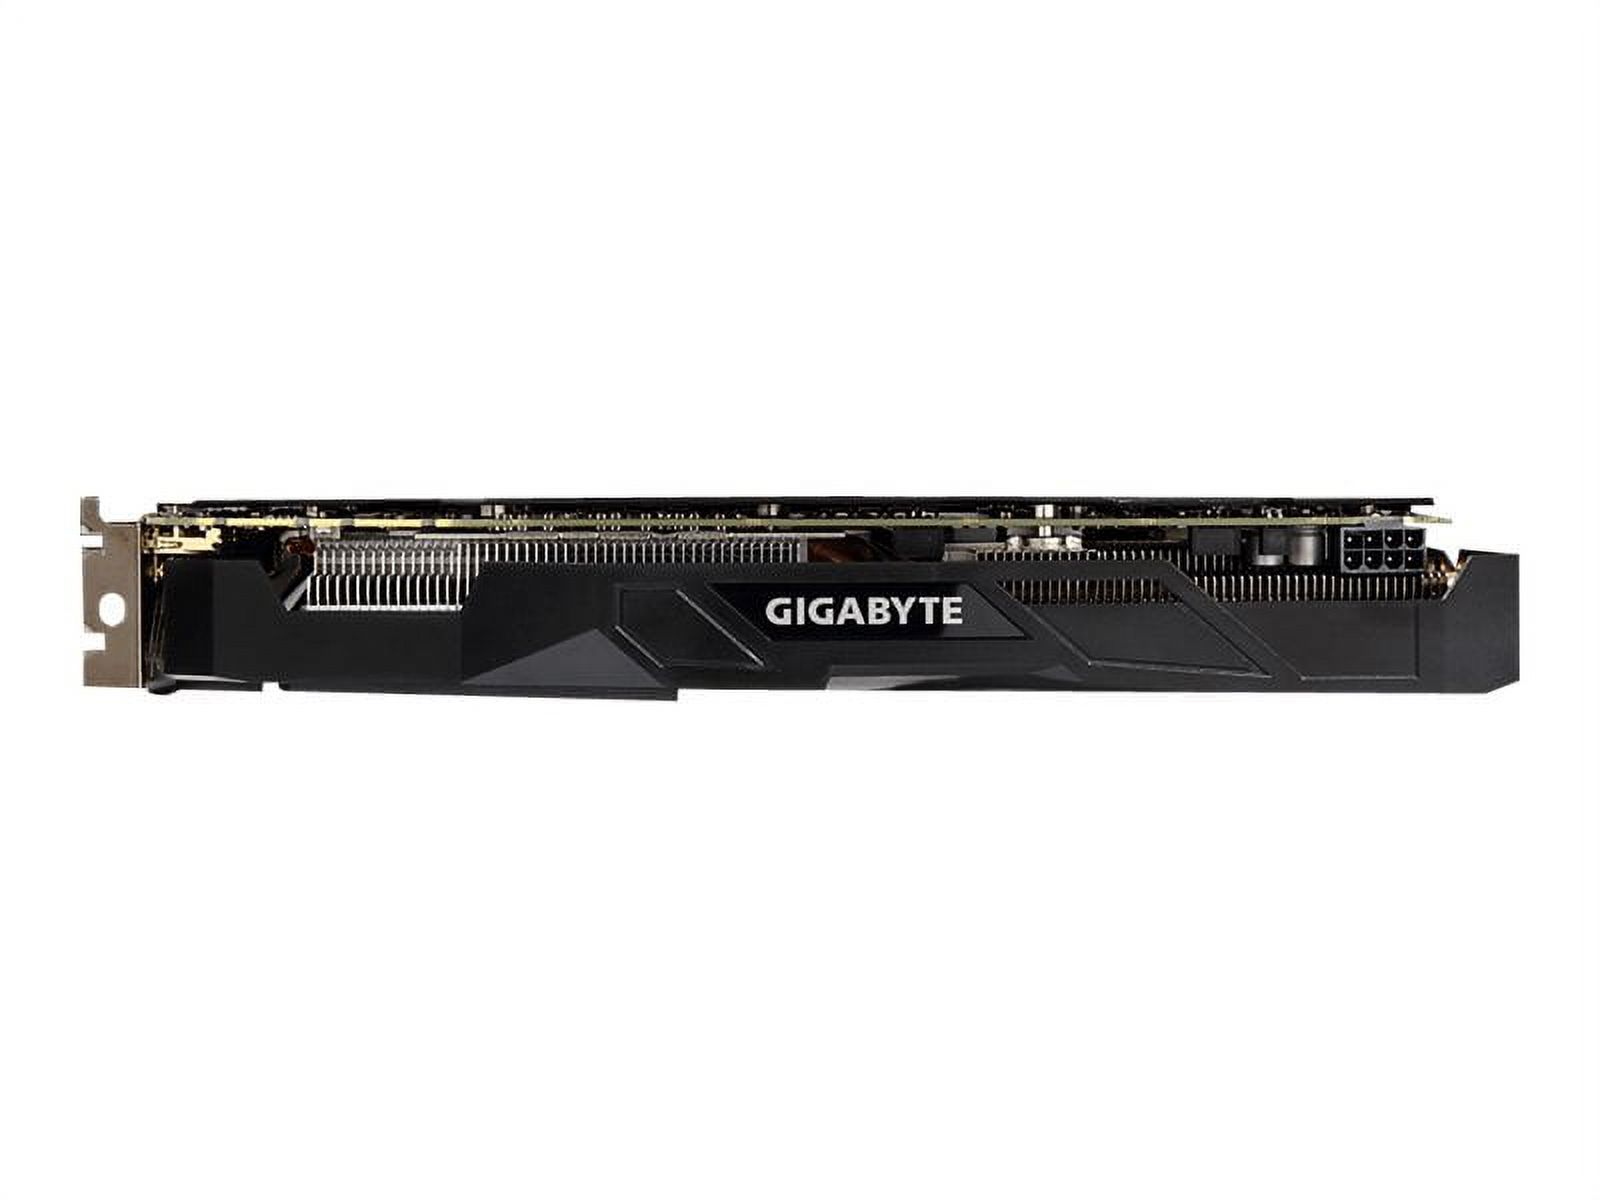 Gigabyte GeForce GTX 1070 WINDFORCE OC - Graphics card - GF GTX 1070 - 8 GB GDDR5 - PCIe 3.0 x16 - DVI, HDMI, 3 x DisplayPort - image 4 of 4